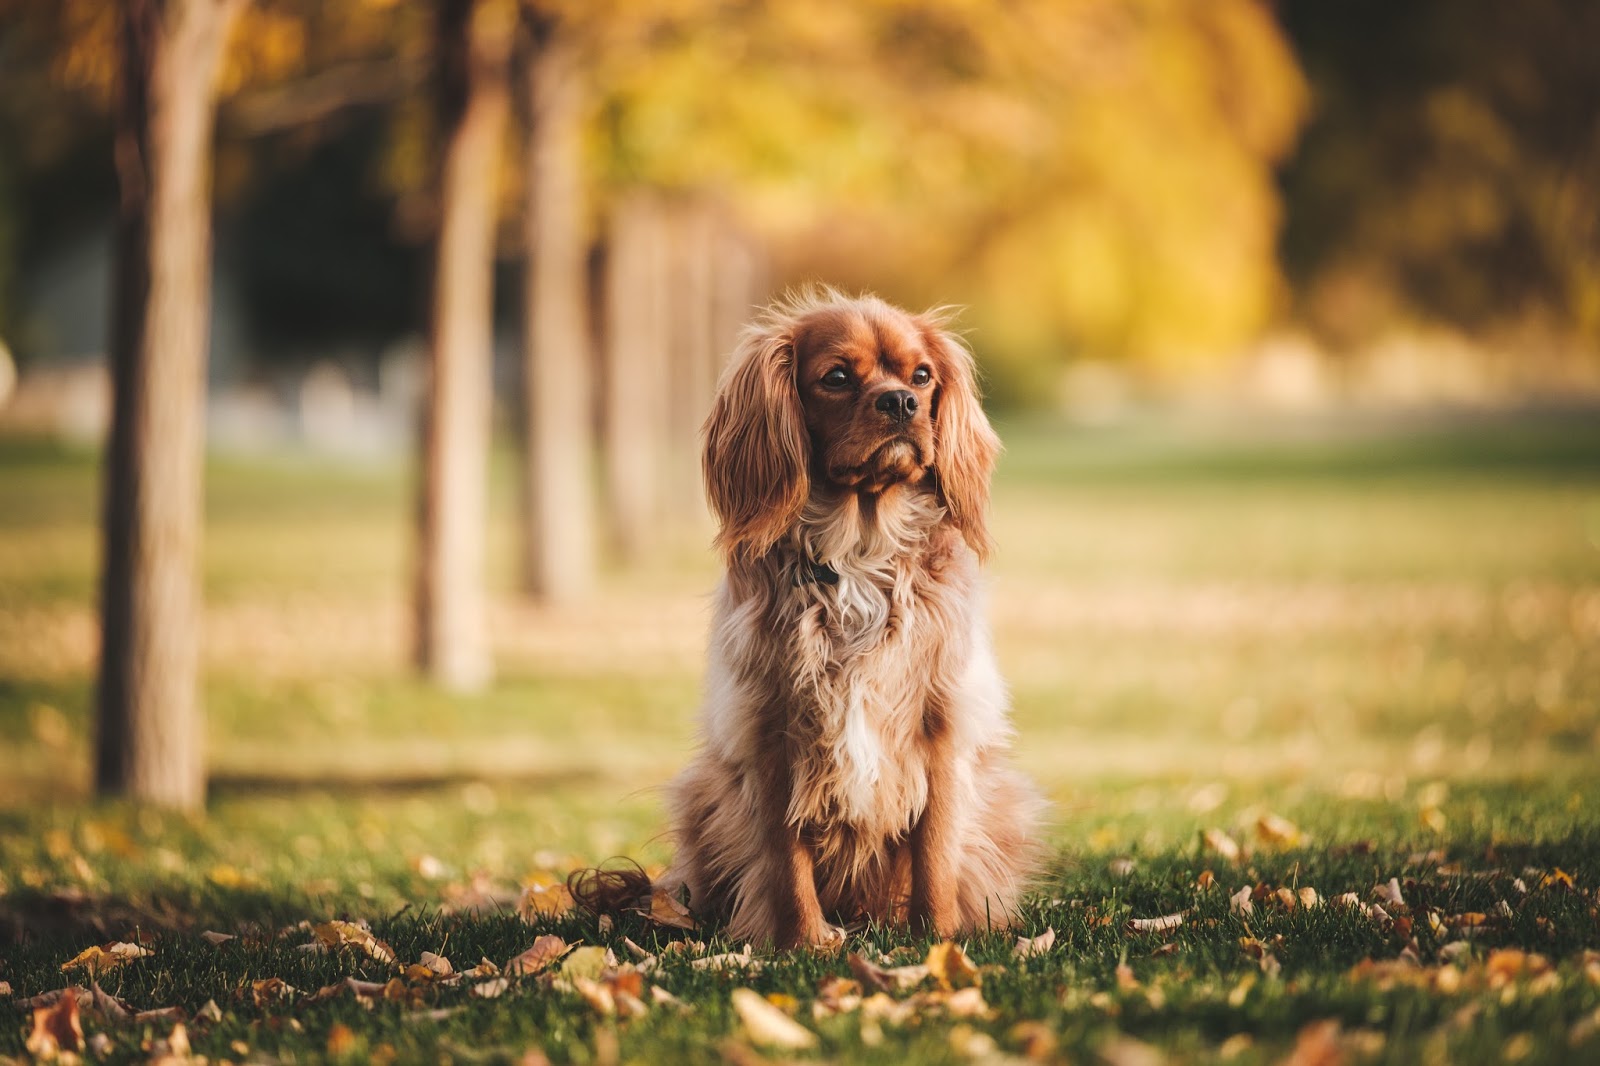 Cute Small Dog Sitting on Grass desktop wallpaper